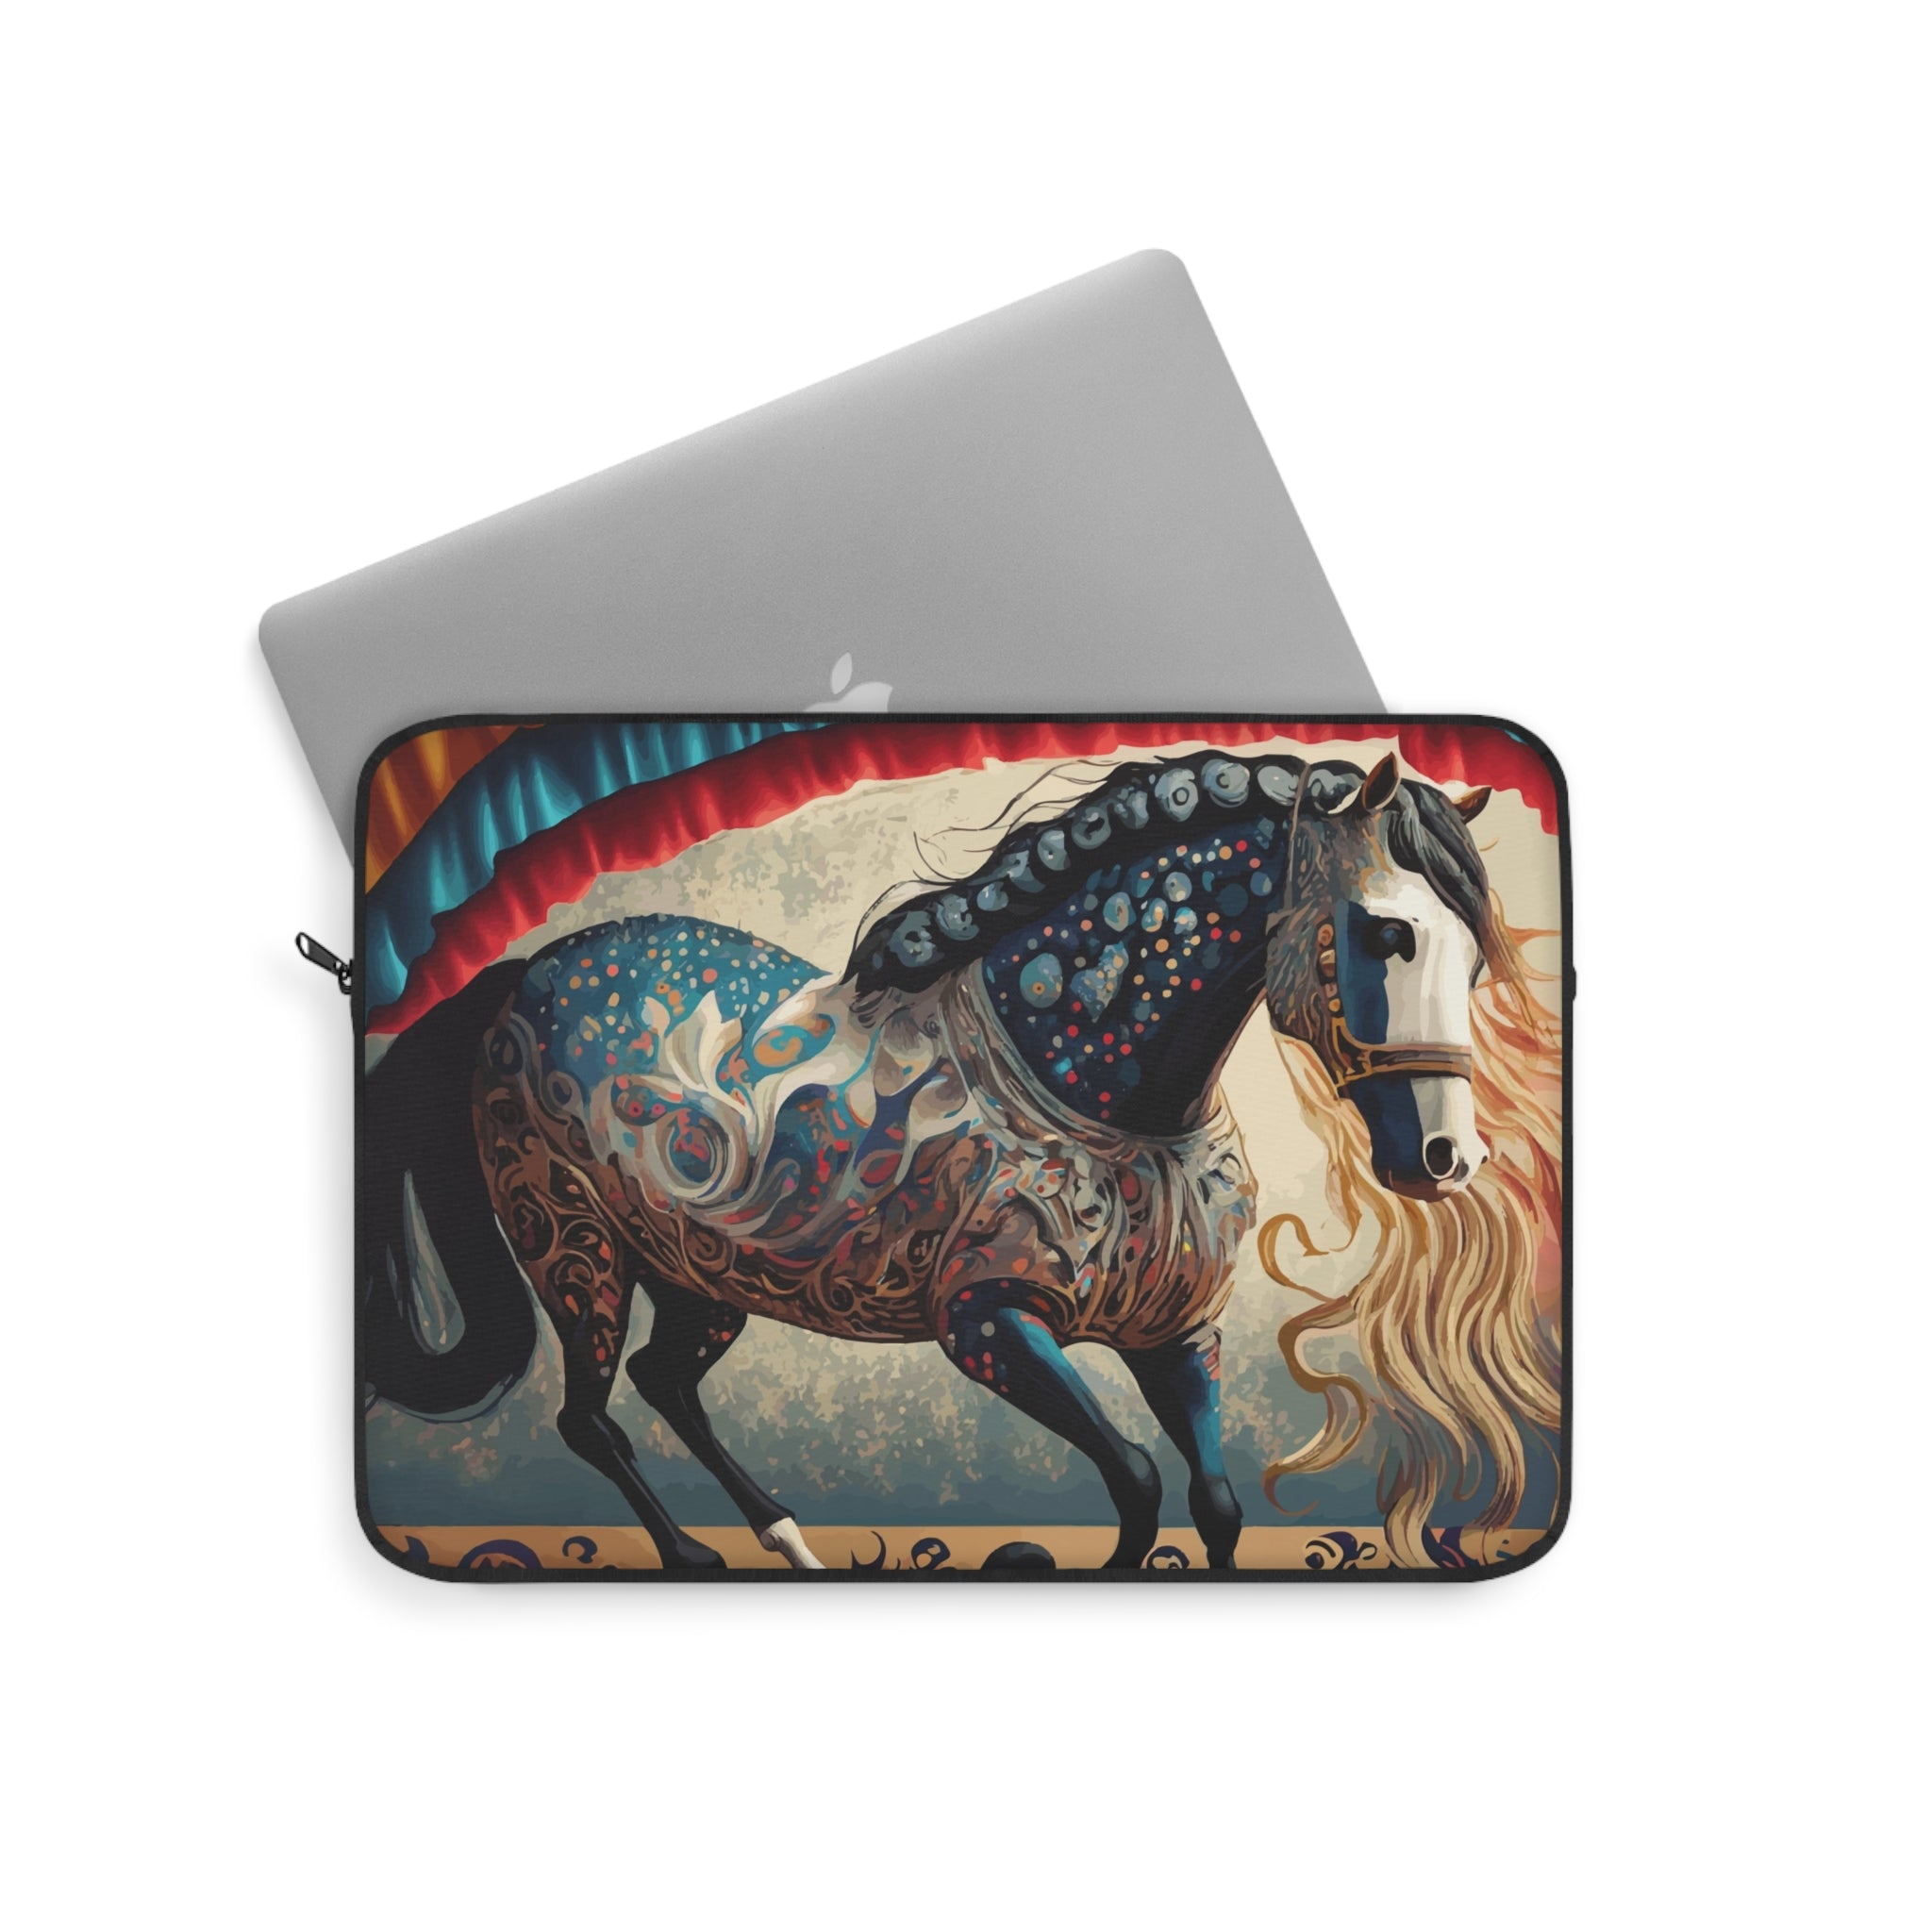 Bejeweled Horse Laptop Sleeve